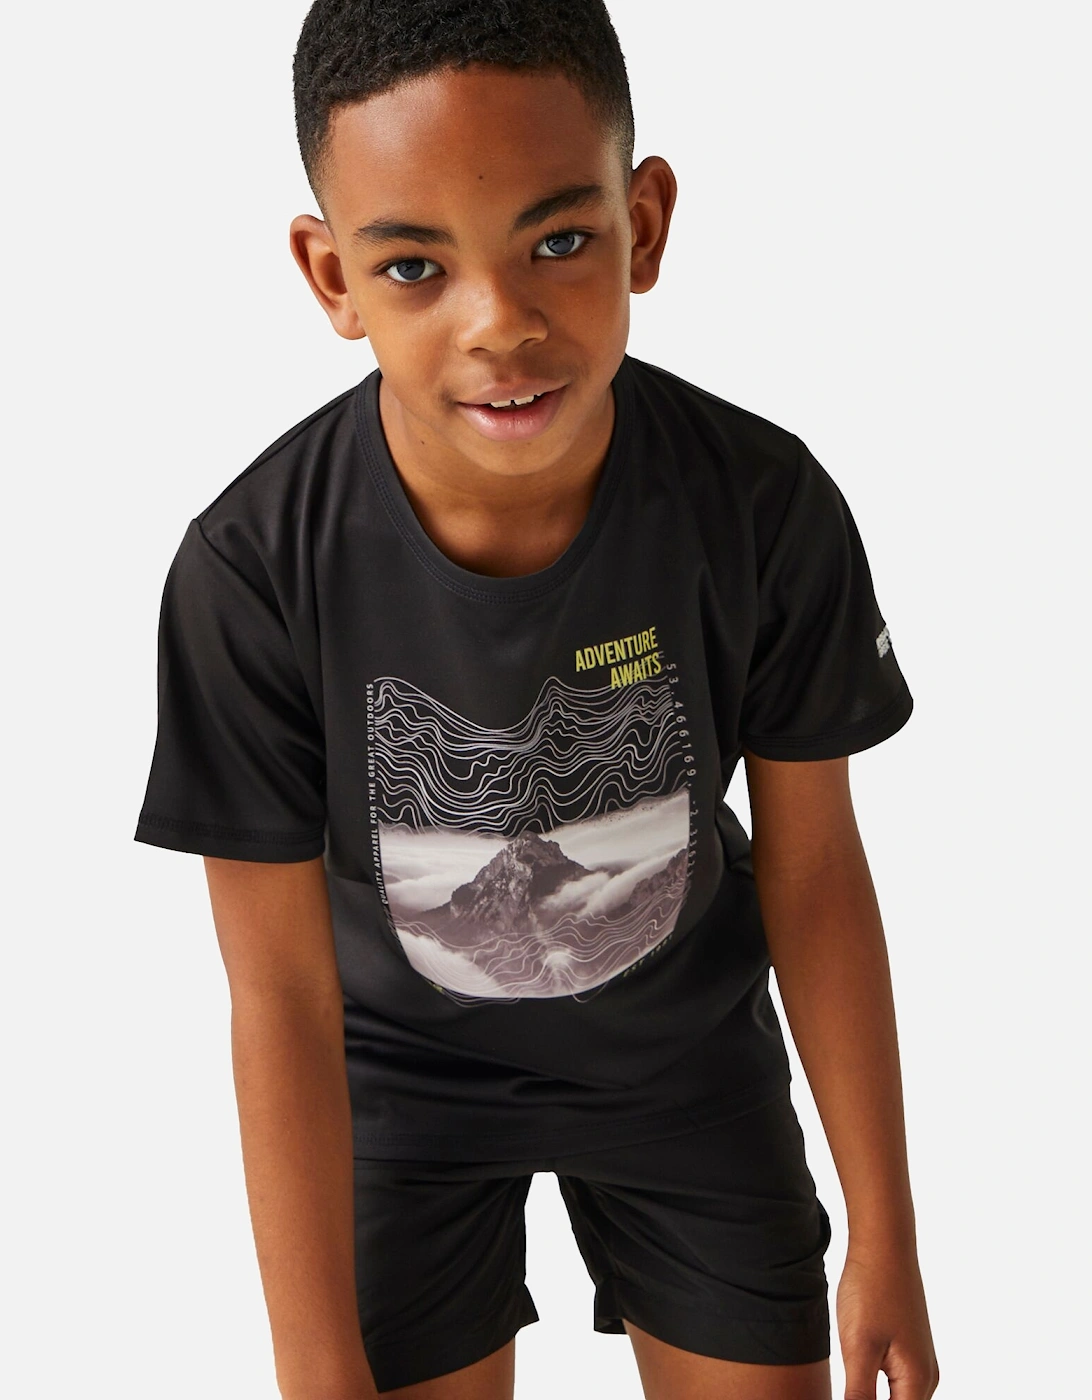 Childrens/Kids Alvardo VIII Mountain T-Shirt